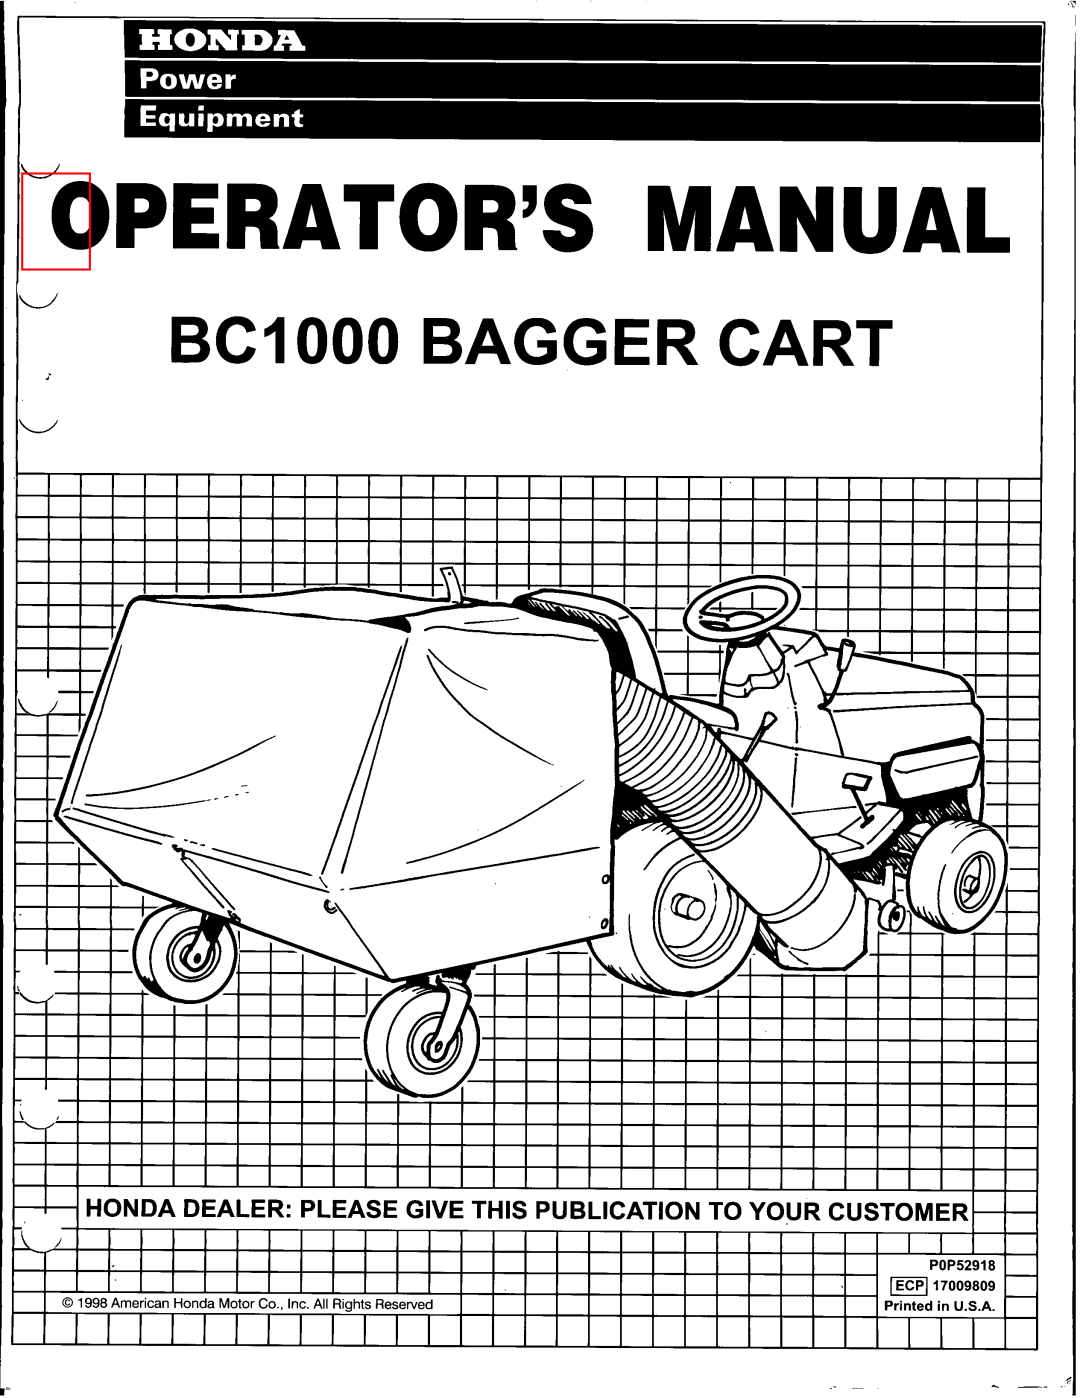 Honda Power Equipment BC100 manual Operator’S Manual, Bciooo Bagger Cart, I I I I I I I Iii Ii I Ii 